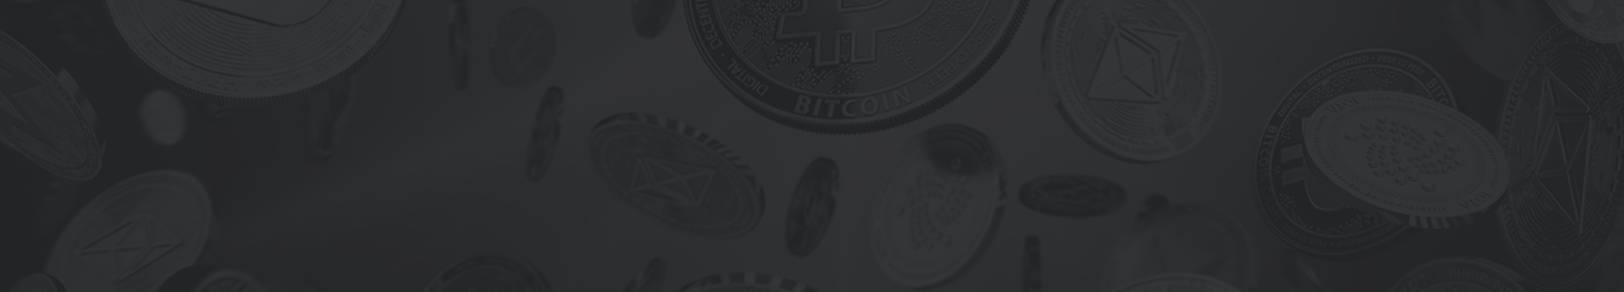 Bitcoin Rejoin - まだ Bitcoin Rejoin に参加していませんか?